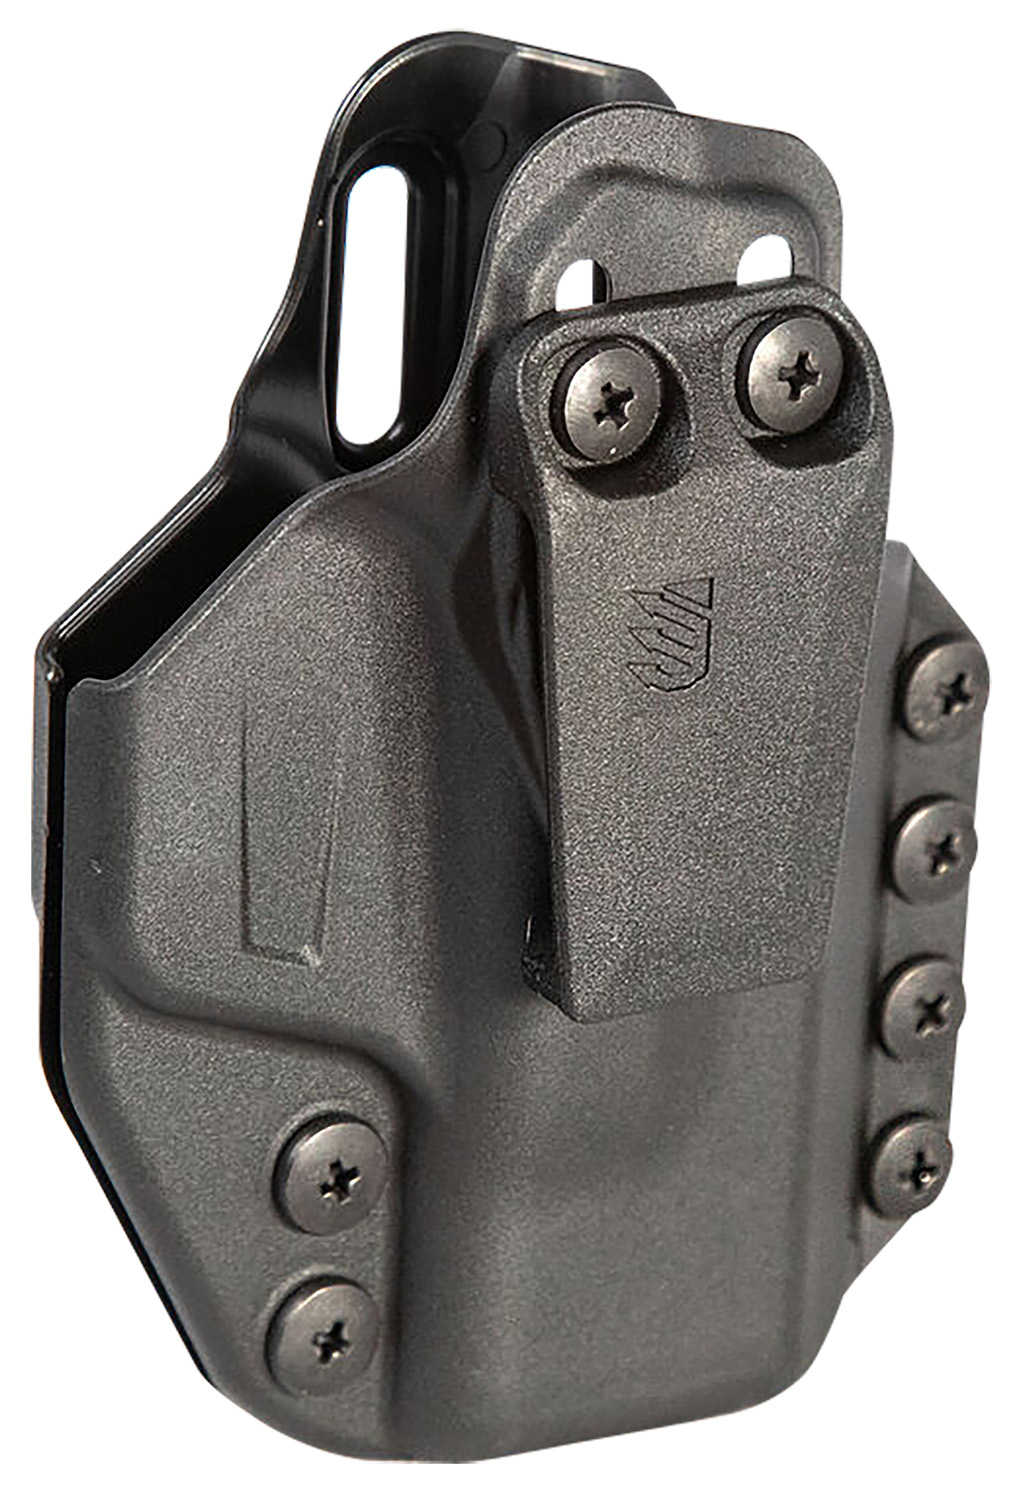 Blackhawk Stache Base Holster Kit IWB Black Polymer Belt Clip Fits Sig P320 Ambidextrous